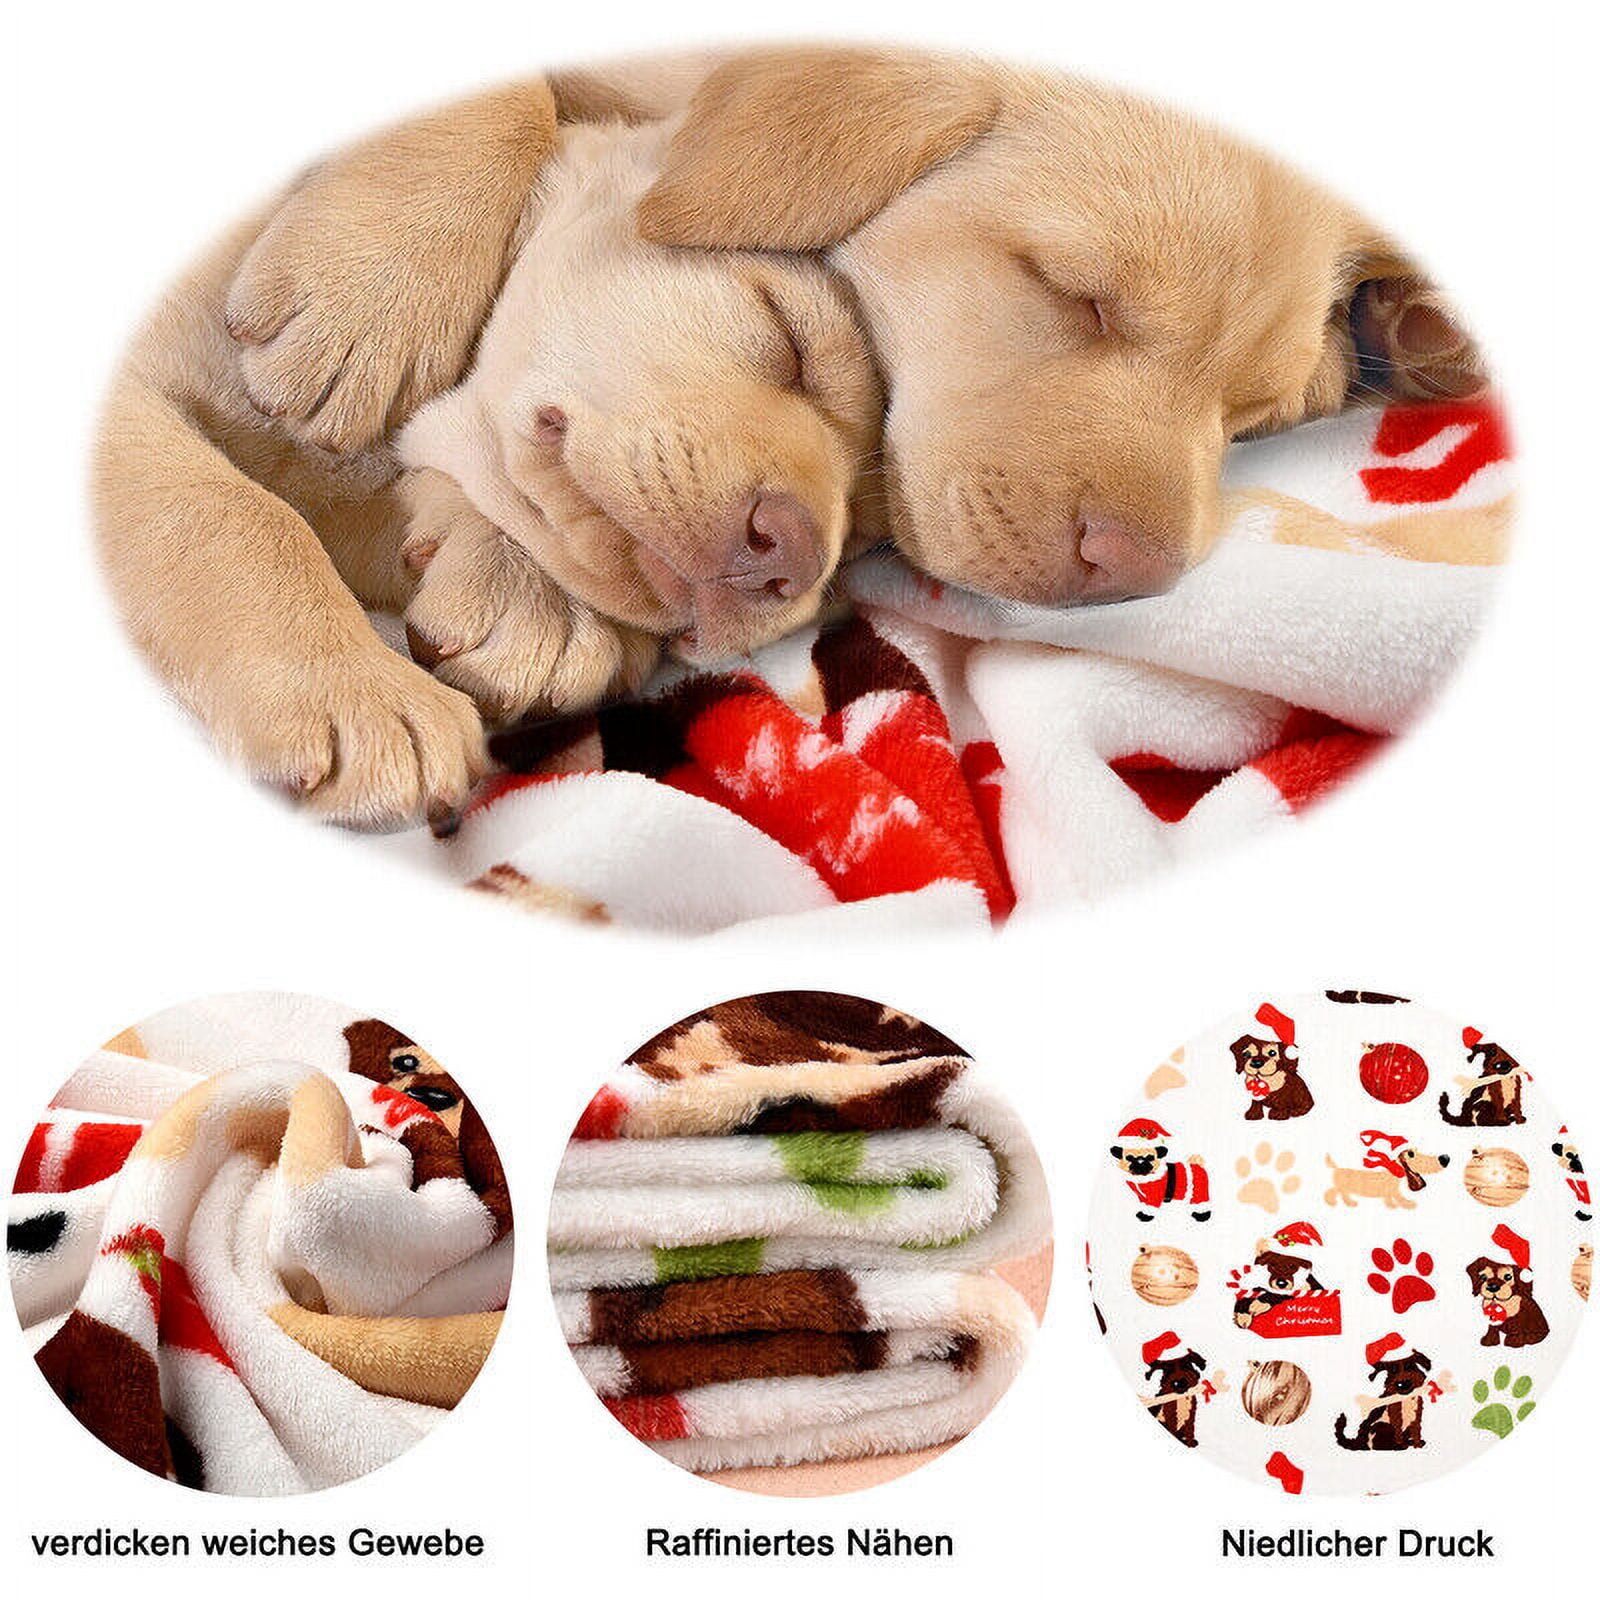 flannel dog blanket winter warm and comfortable pet bed sheet mat cartoon  cute cat and dog sleeping blanket pet supplies